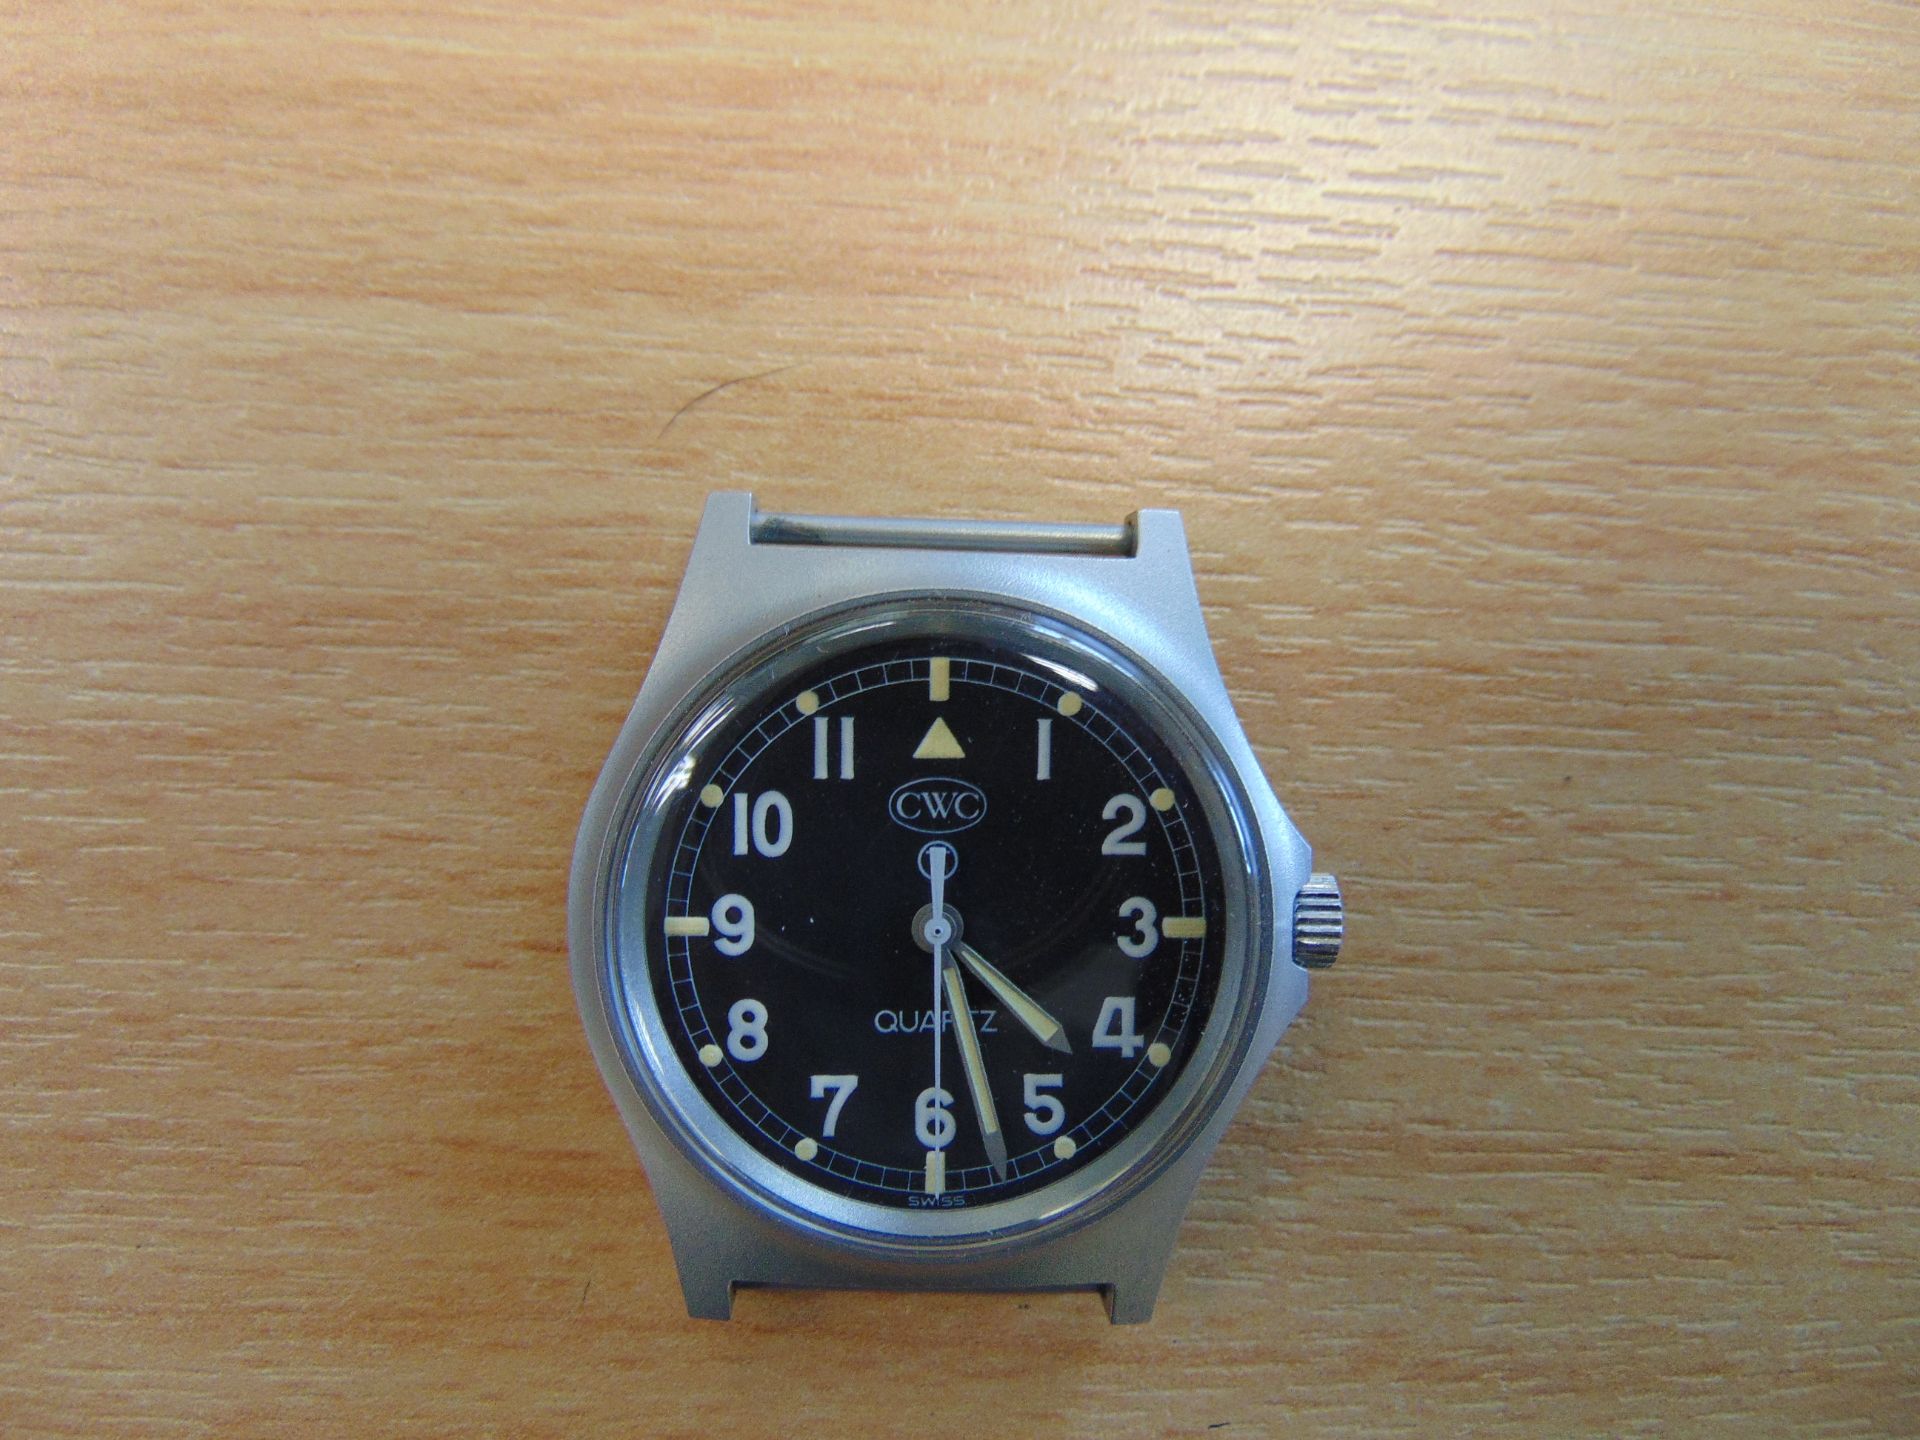 V Rare Unissued CWC (Cabot Watch Co Switzerland) British Army W10 Service Watch Dated 1983